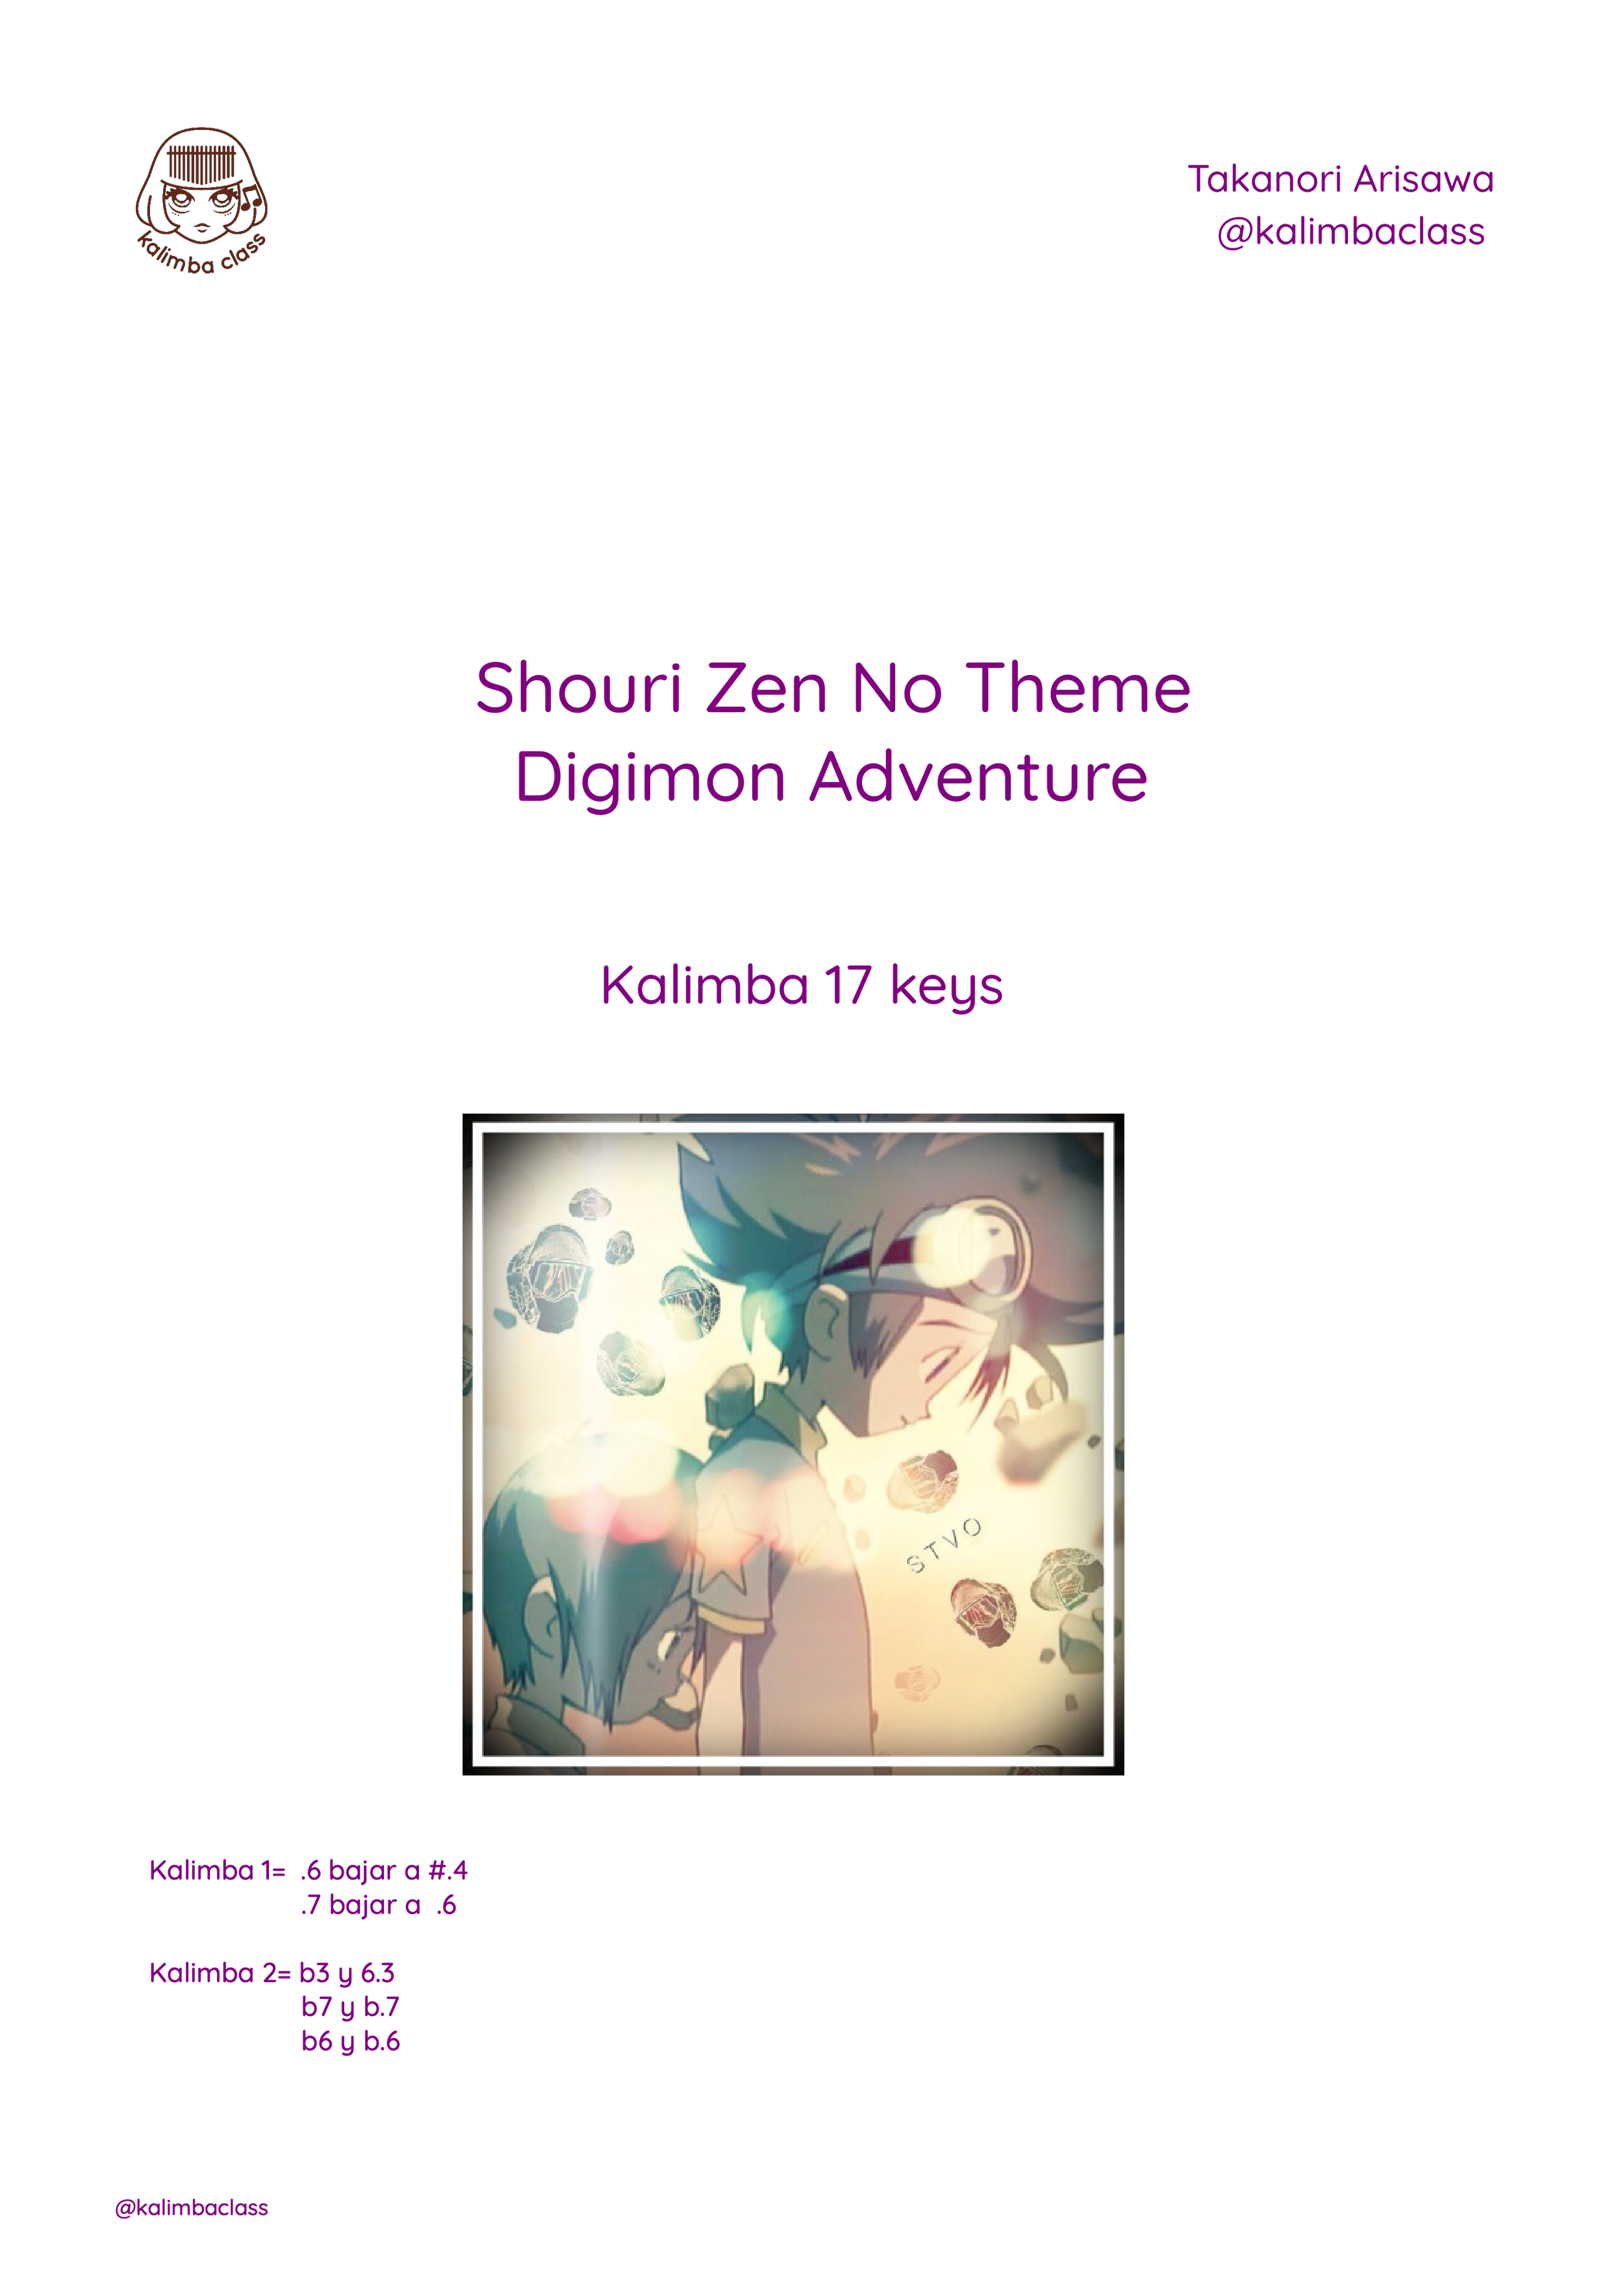 Shouri Zen No Theme, Digimon Adventure